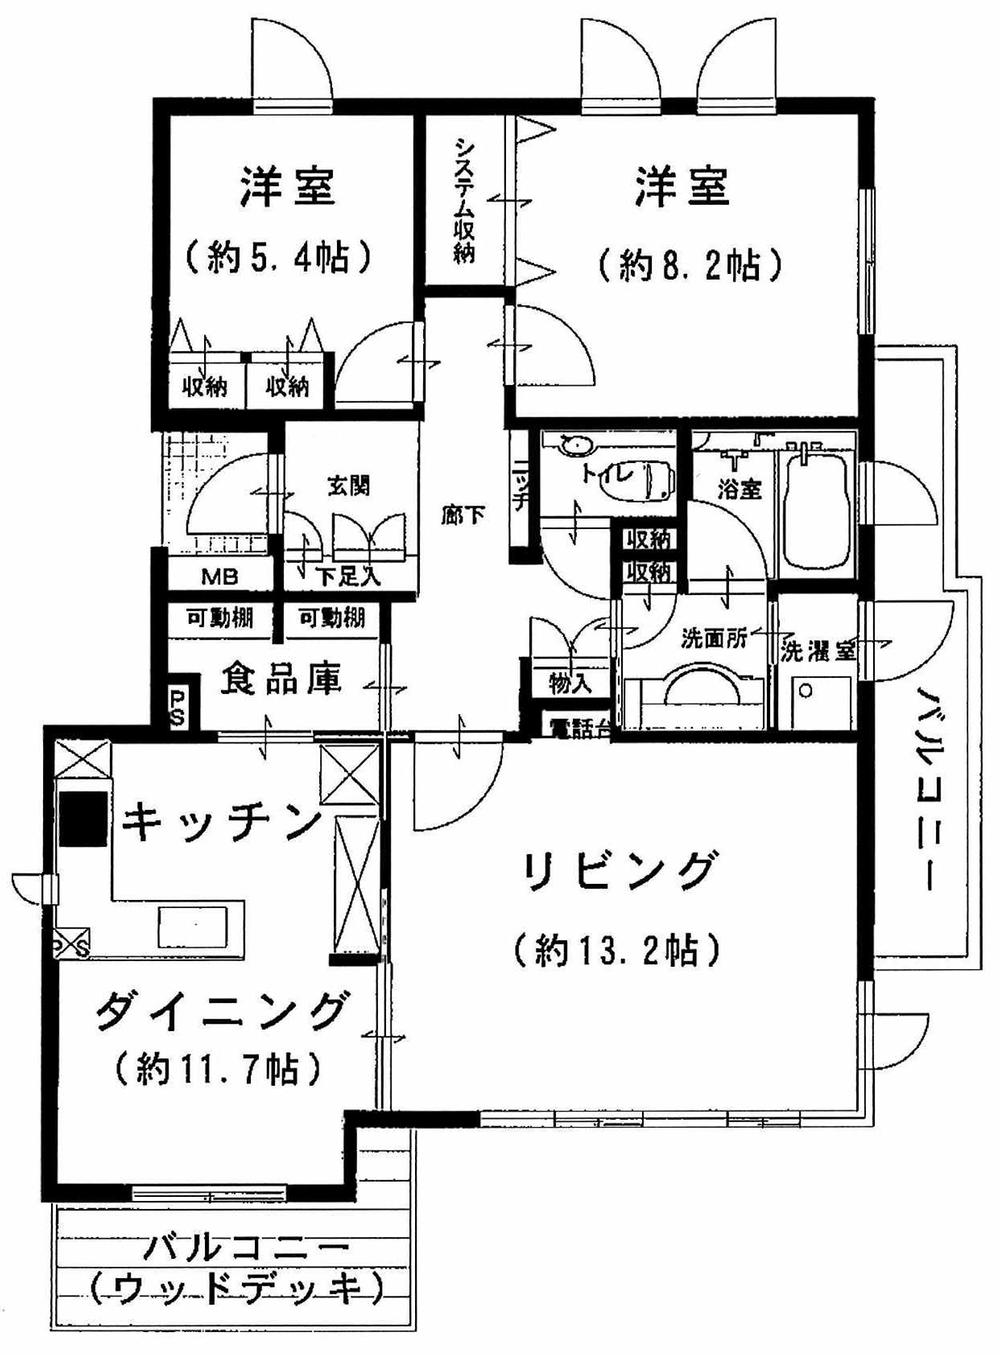 Floor plan. 2LDK, Price 39,800,000 yen, Occupied area 90.38 sq m , Balcony area 14.98 sq m